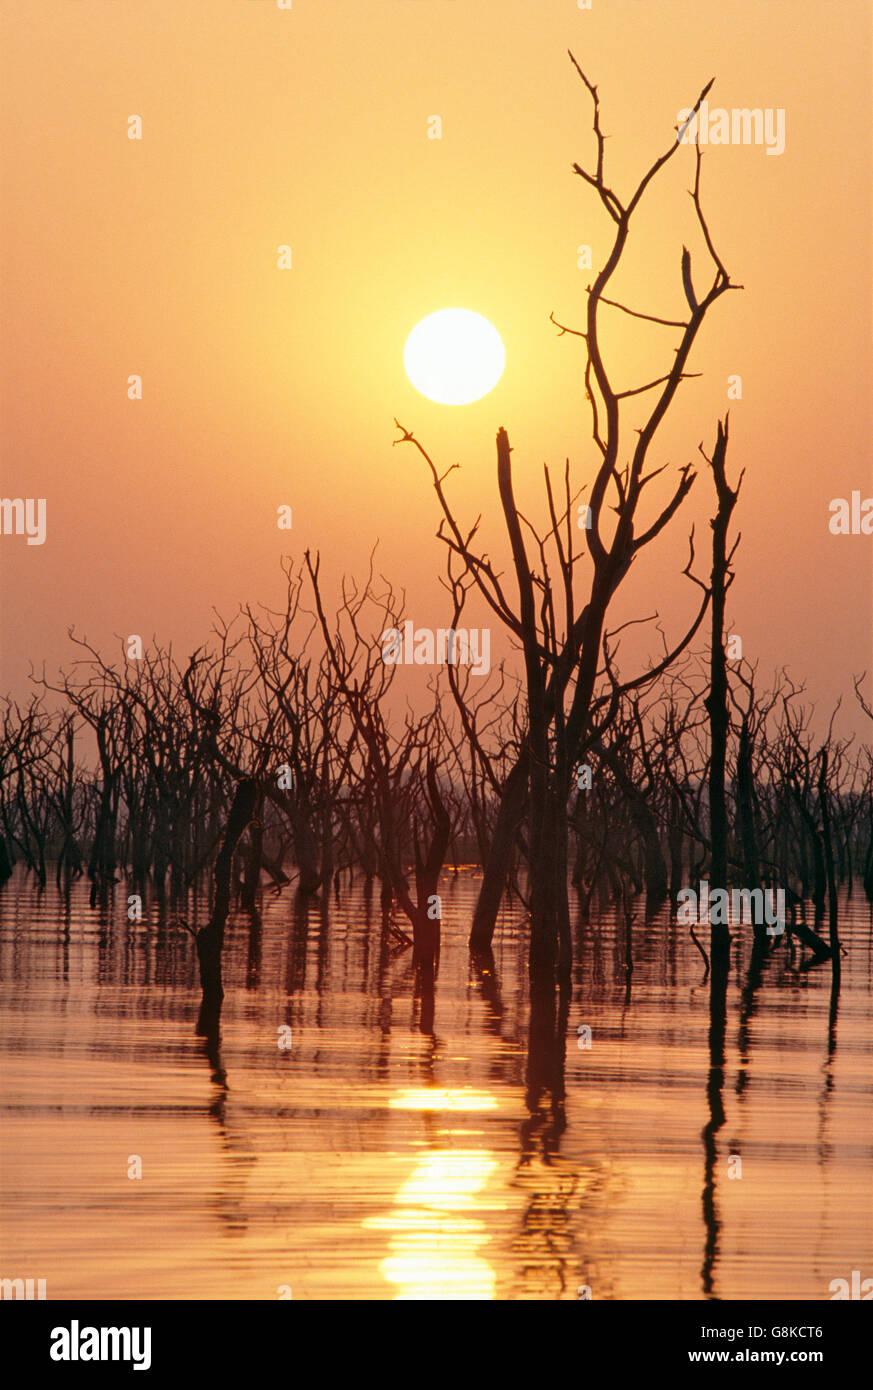 Dead hydroponic trees in Lake Kariba during sunset, Zimbabwe. Stock Photo